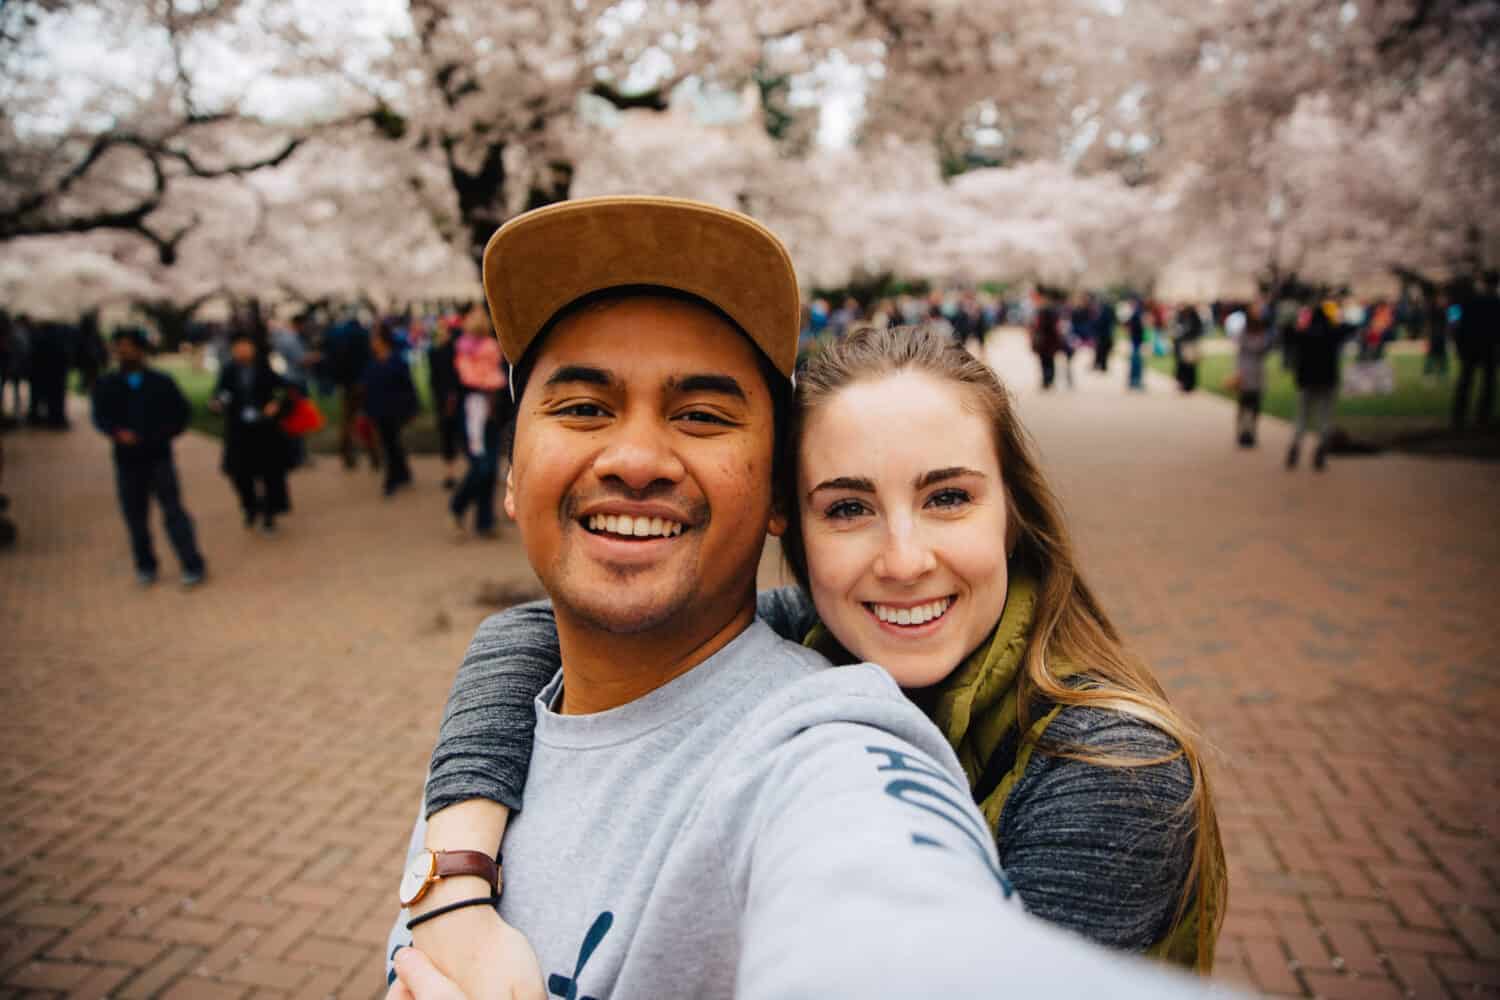 Cherry Blossoms at University of Washington